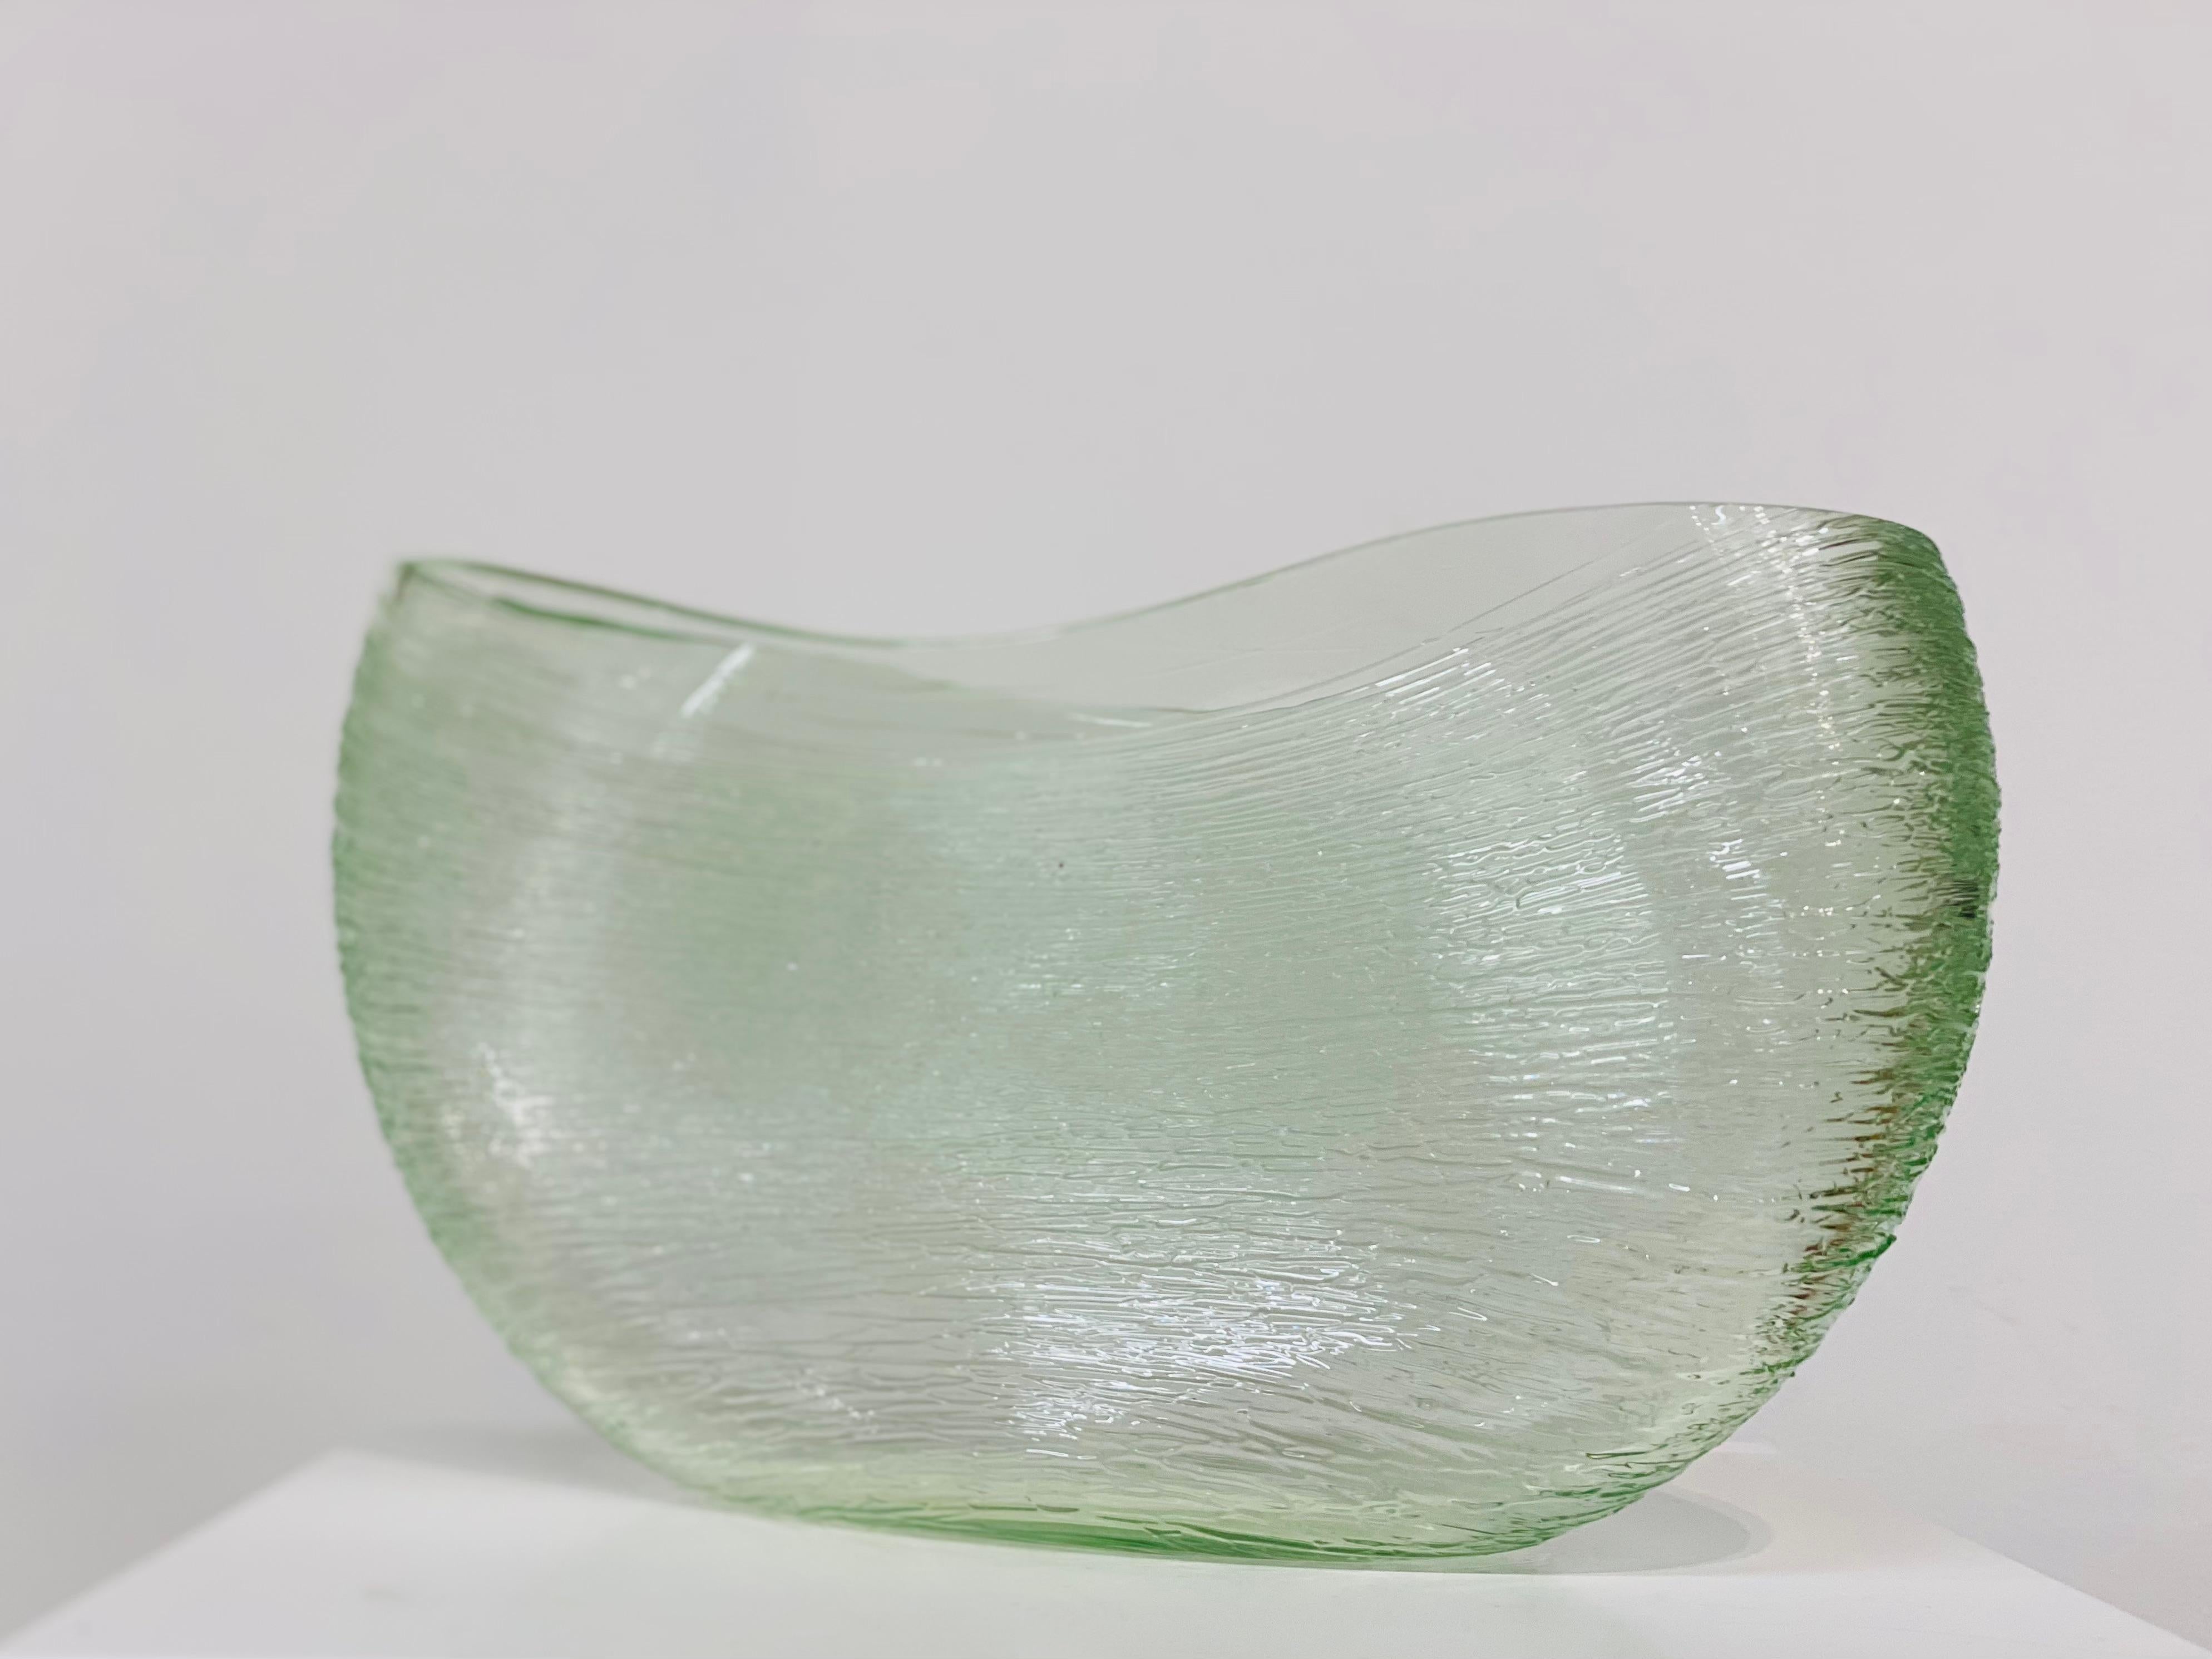 Oval Fluid Form, green- 21st Century Blown Glass Object  - Sculpture by Bibi Smit